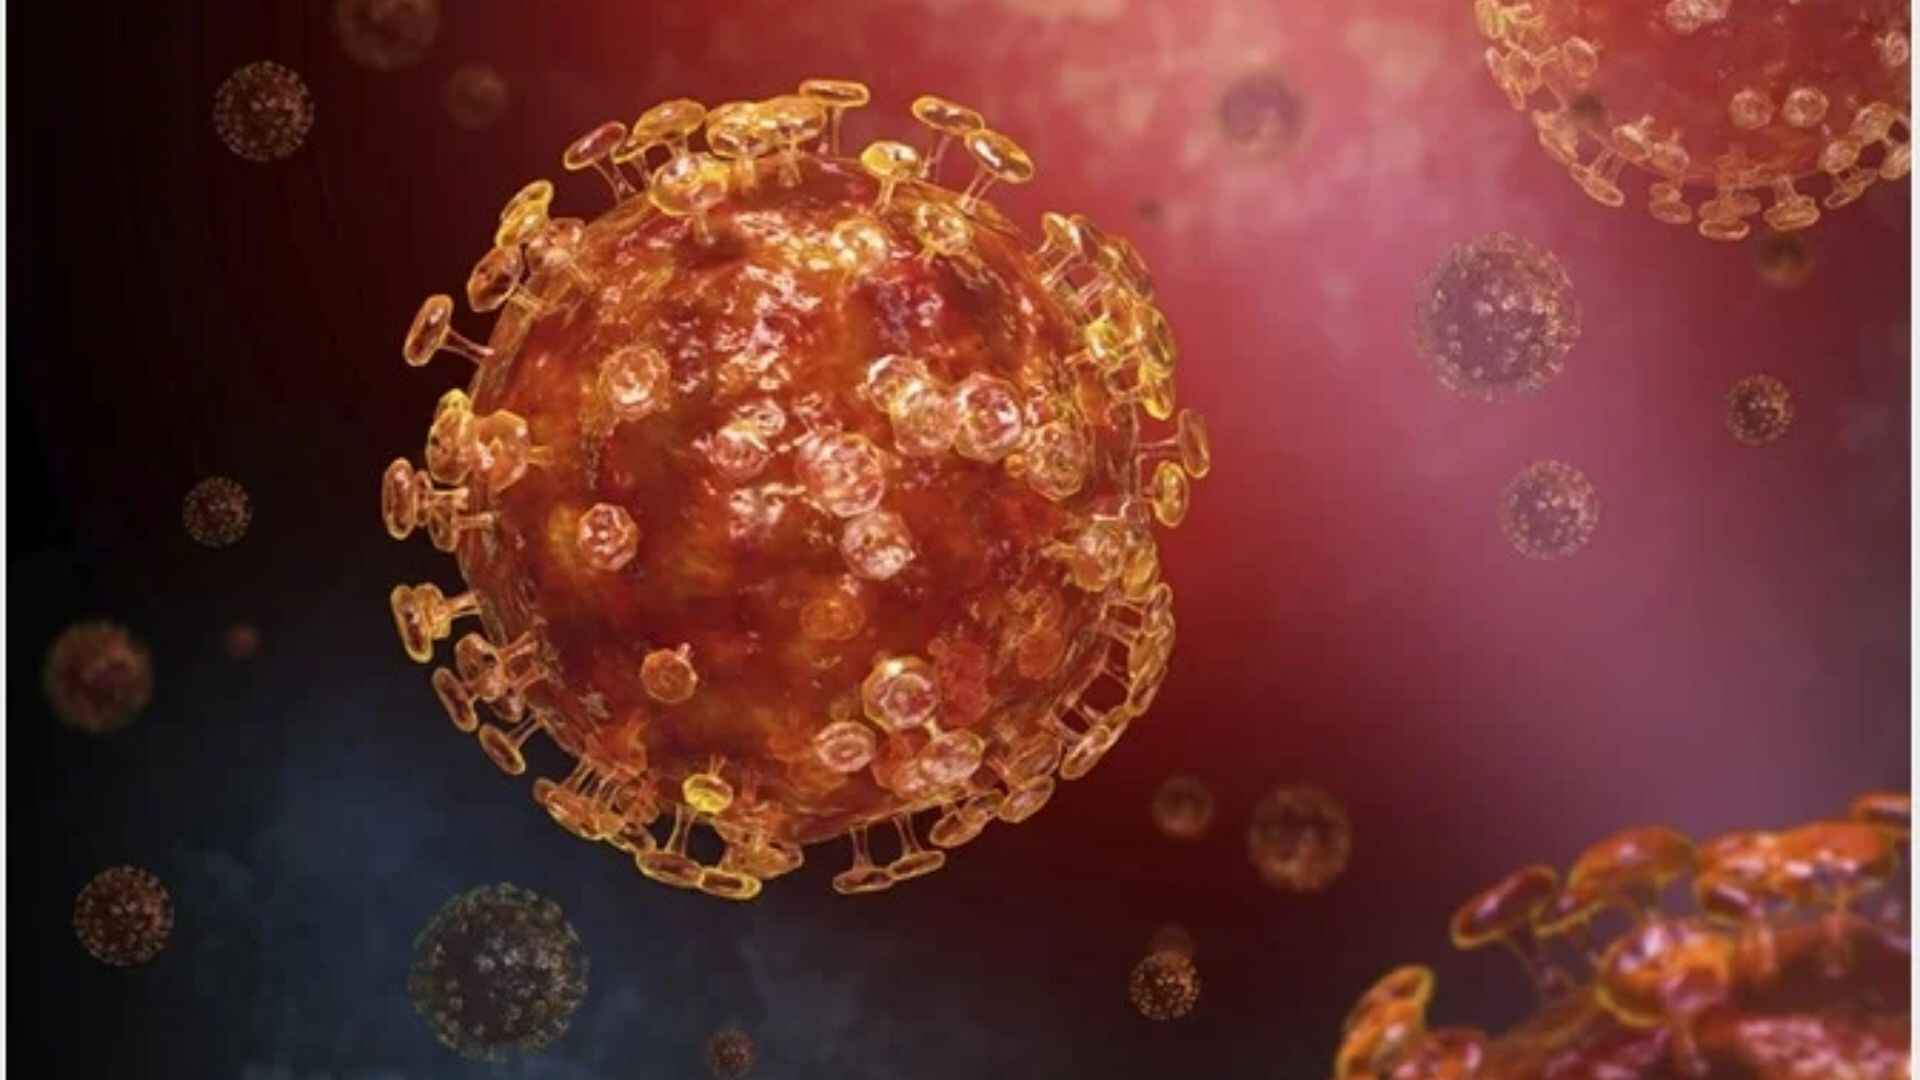 MERS Coronavirus: WHO Reported Three Cases In Saudi Arabia